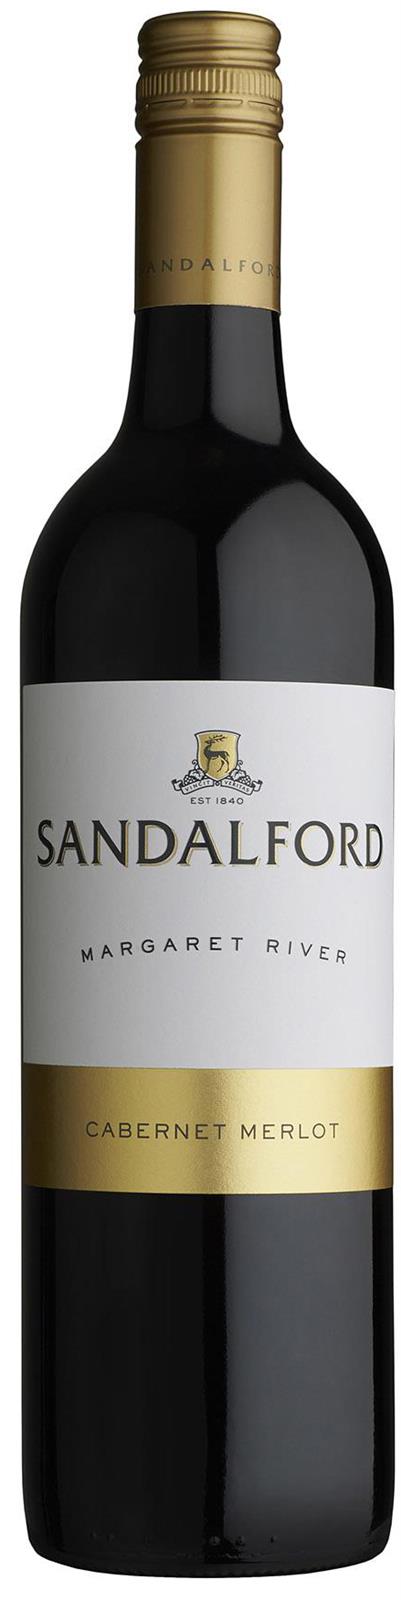 Sandalford Margaret River Cabernet Merlot 2017 (Australia)